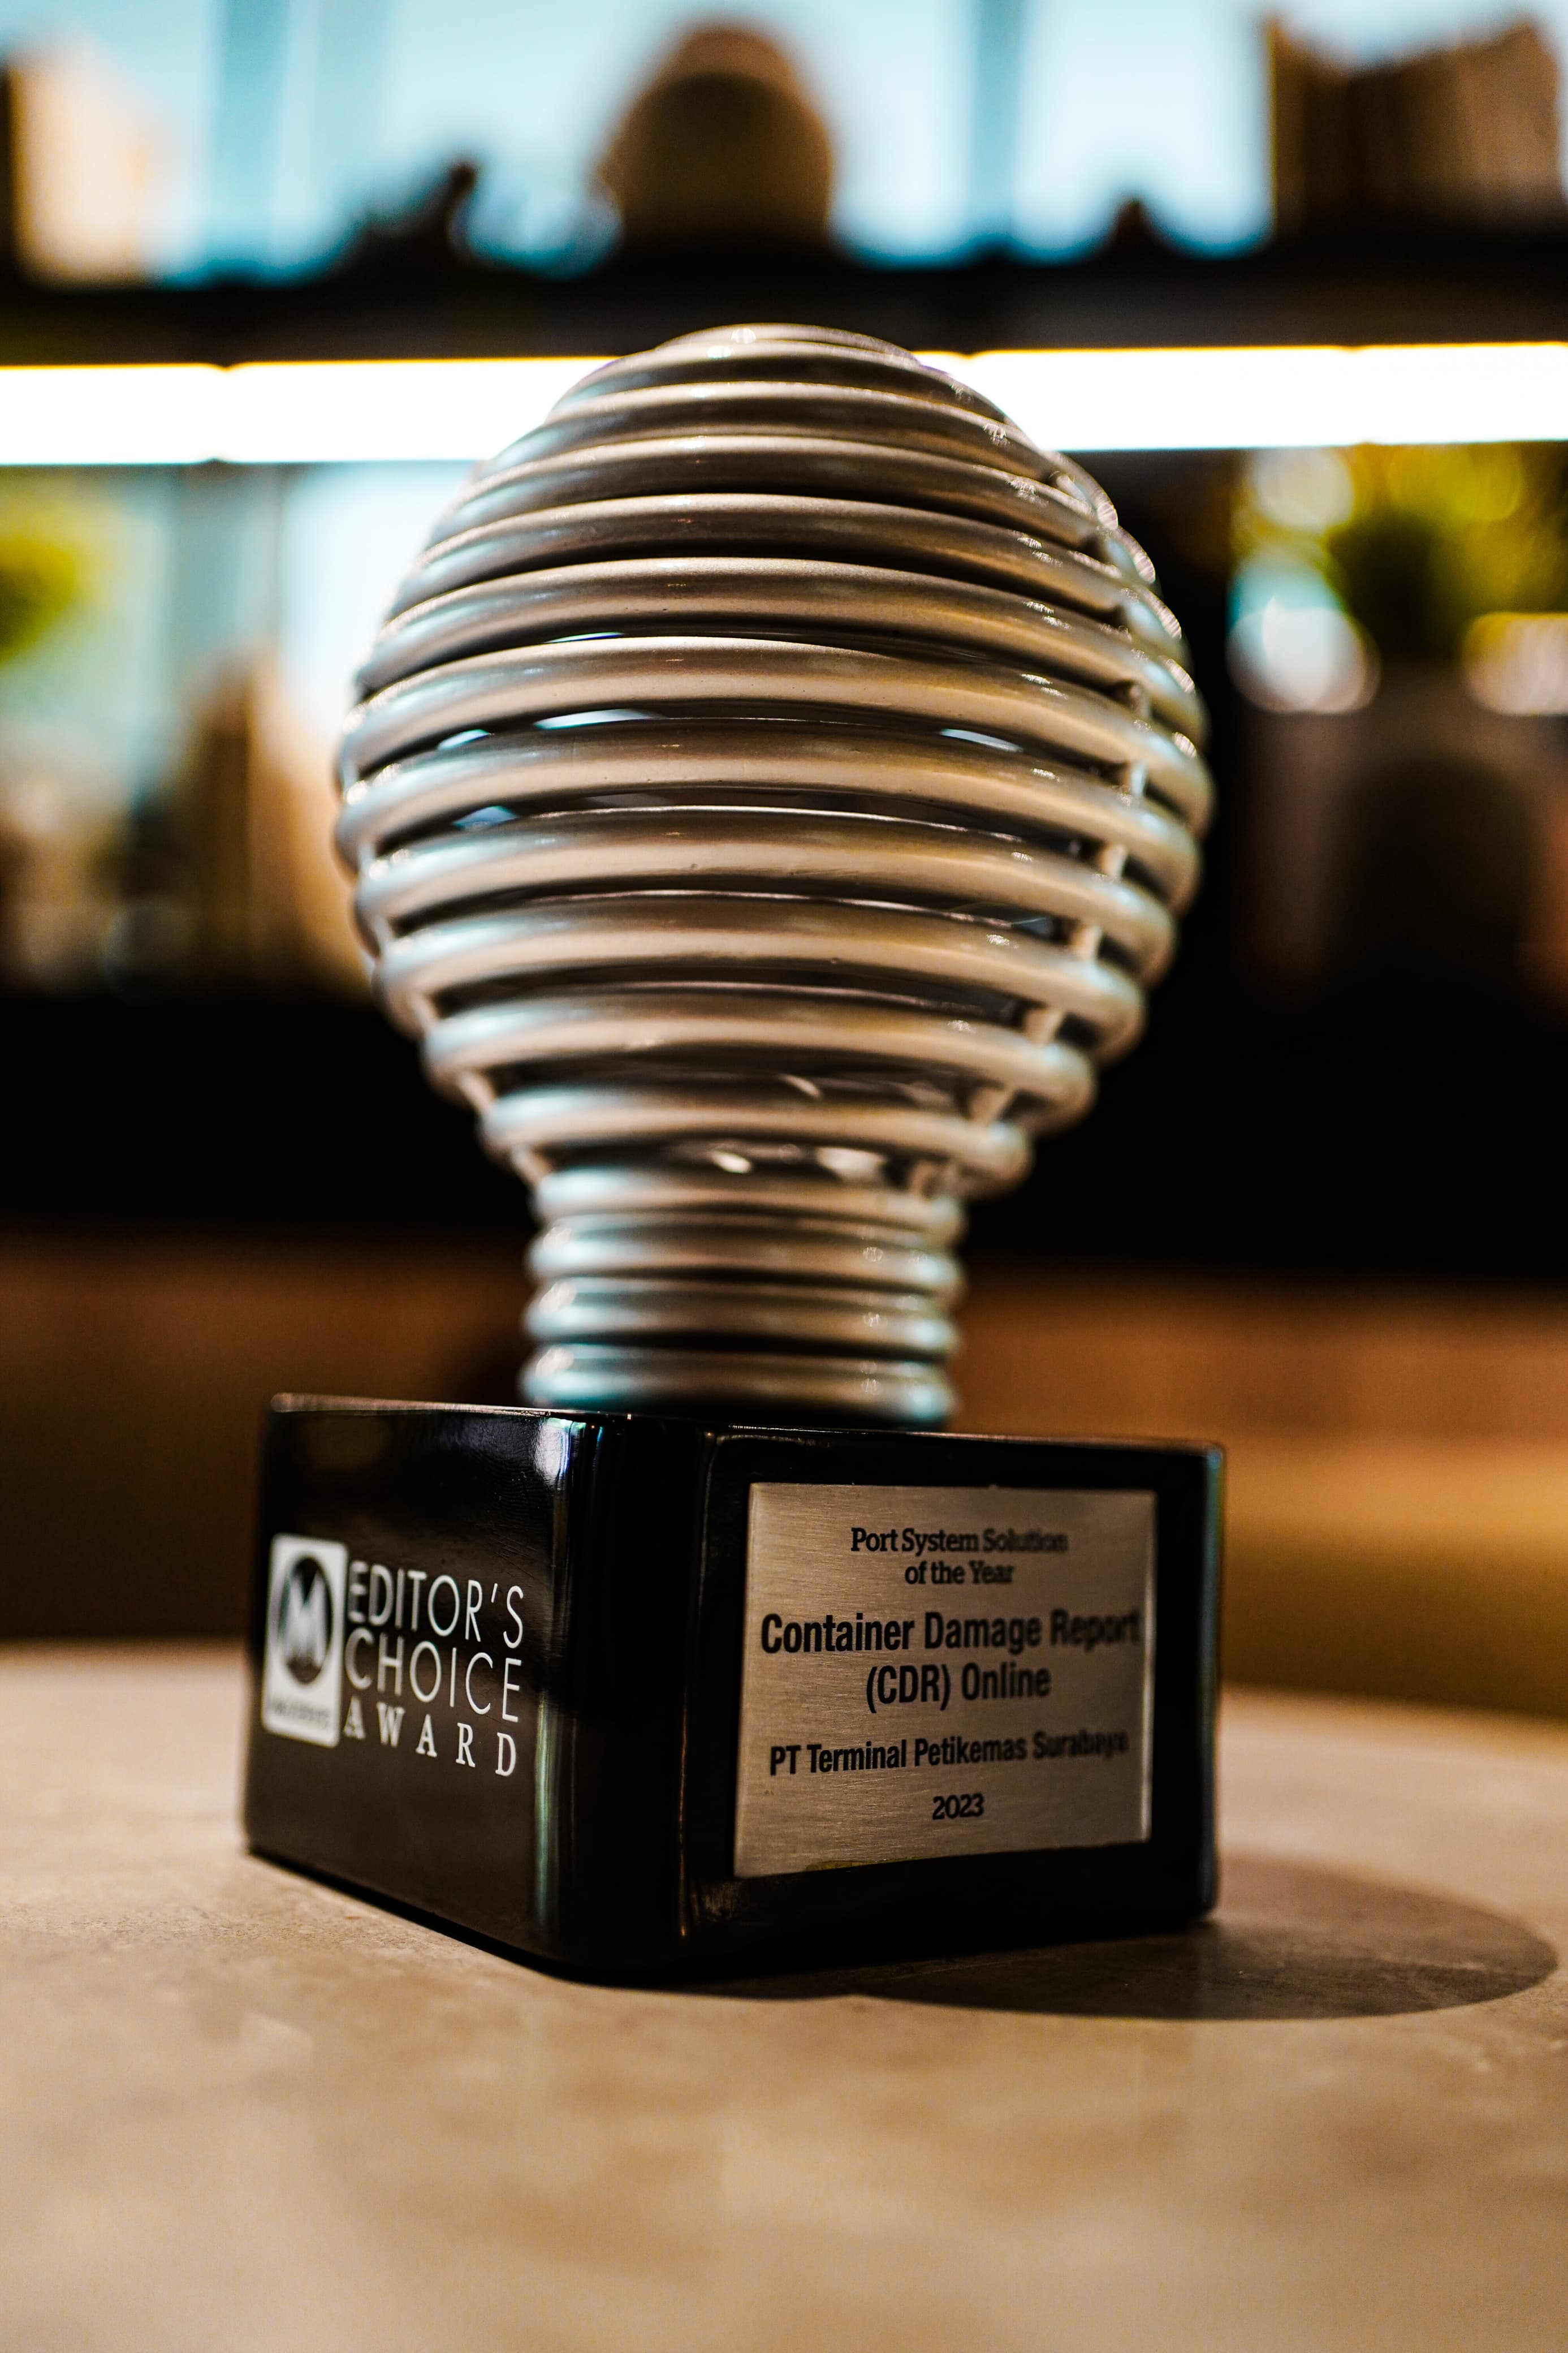 Piala Penghargaan Kategori Port System Solution of the Year, melalui aplikasi Container Damage Report (CDR) Online